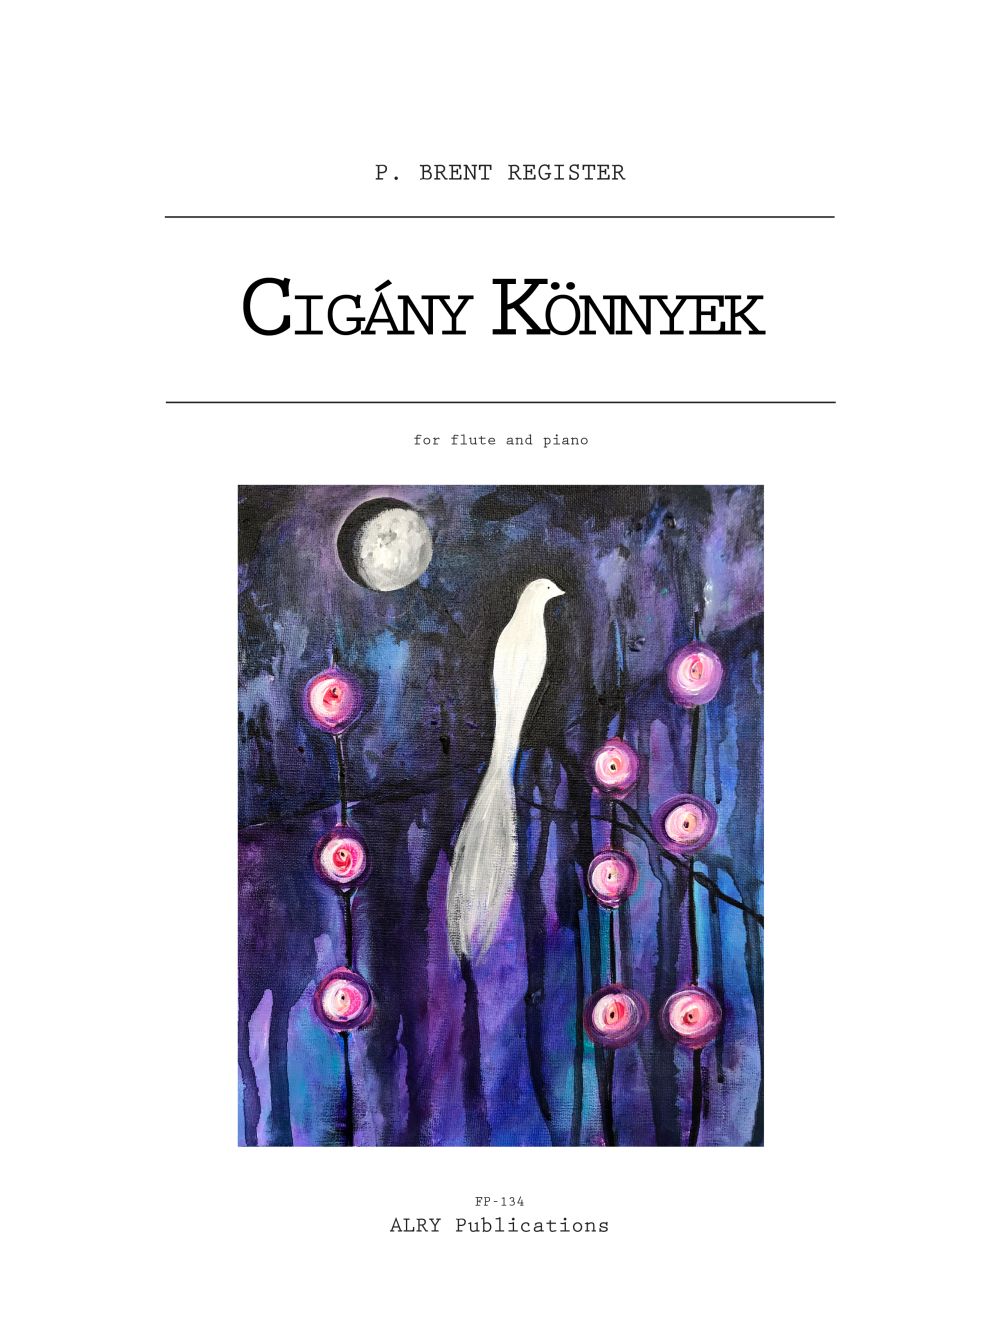 Cigany Konnyek (Gypsy Tears) (REGISTER P)